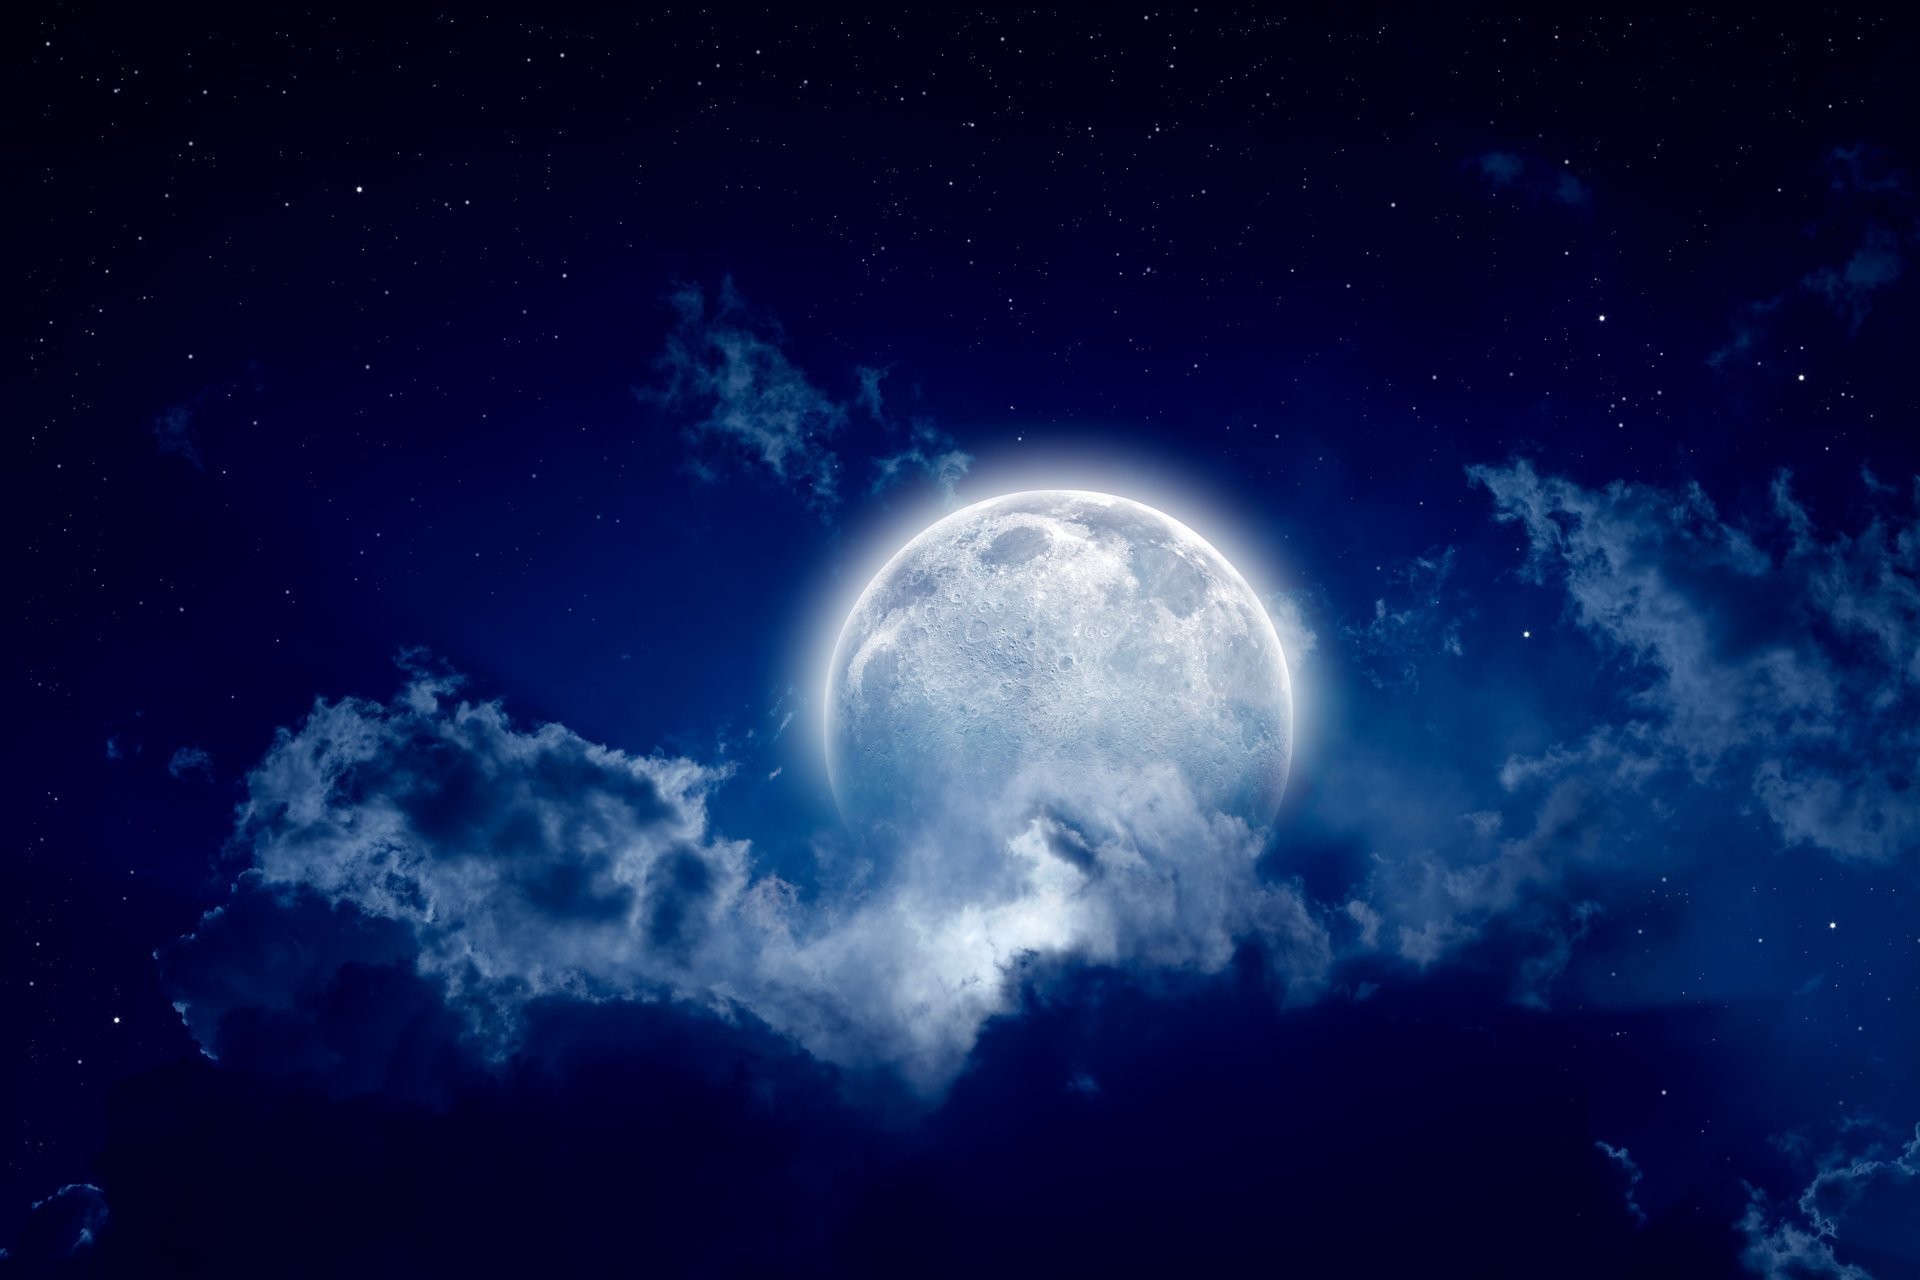 1920x1280 moon moonlight night cloudy night full moon sky beautiful scene landscape  moon moonlight night cloudy night